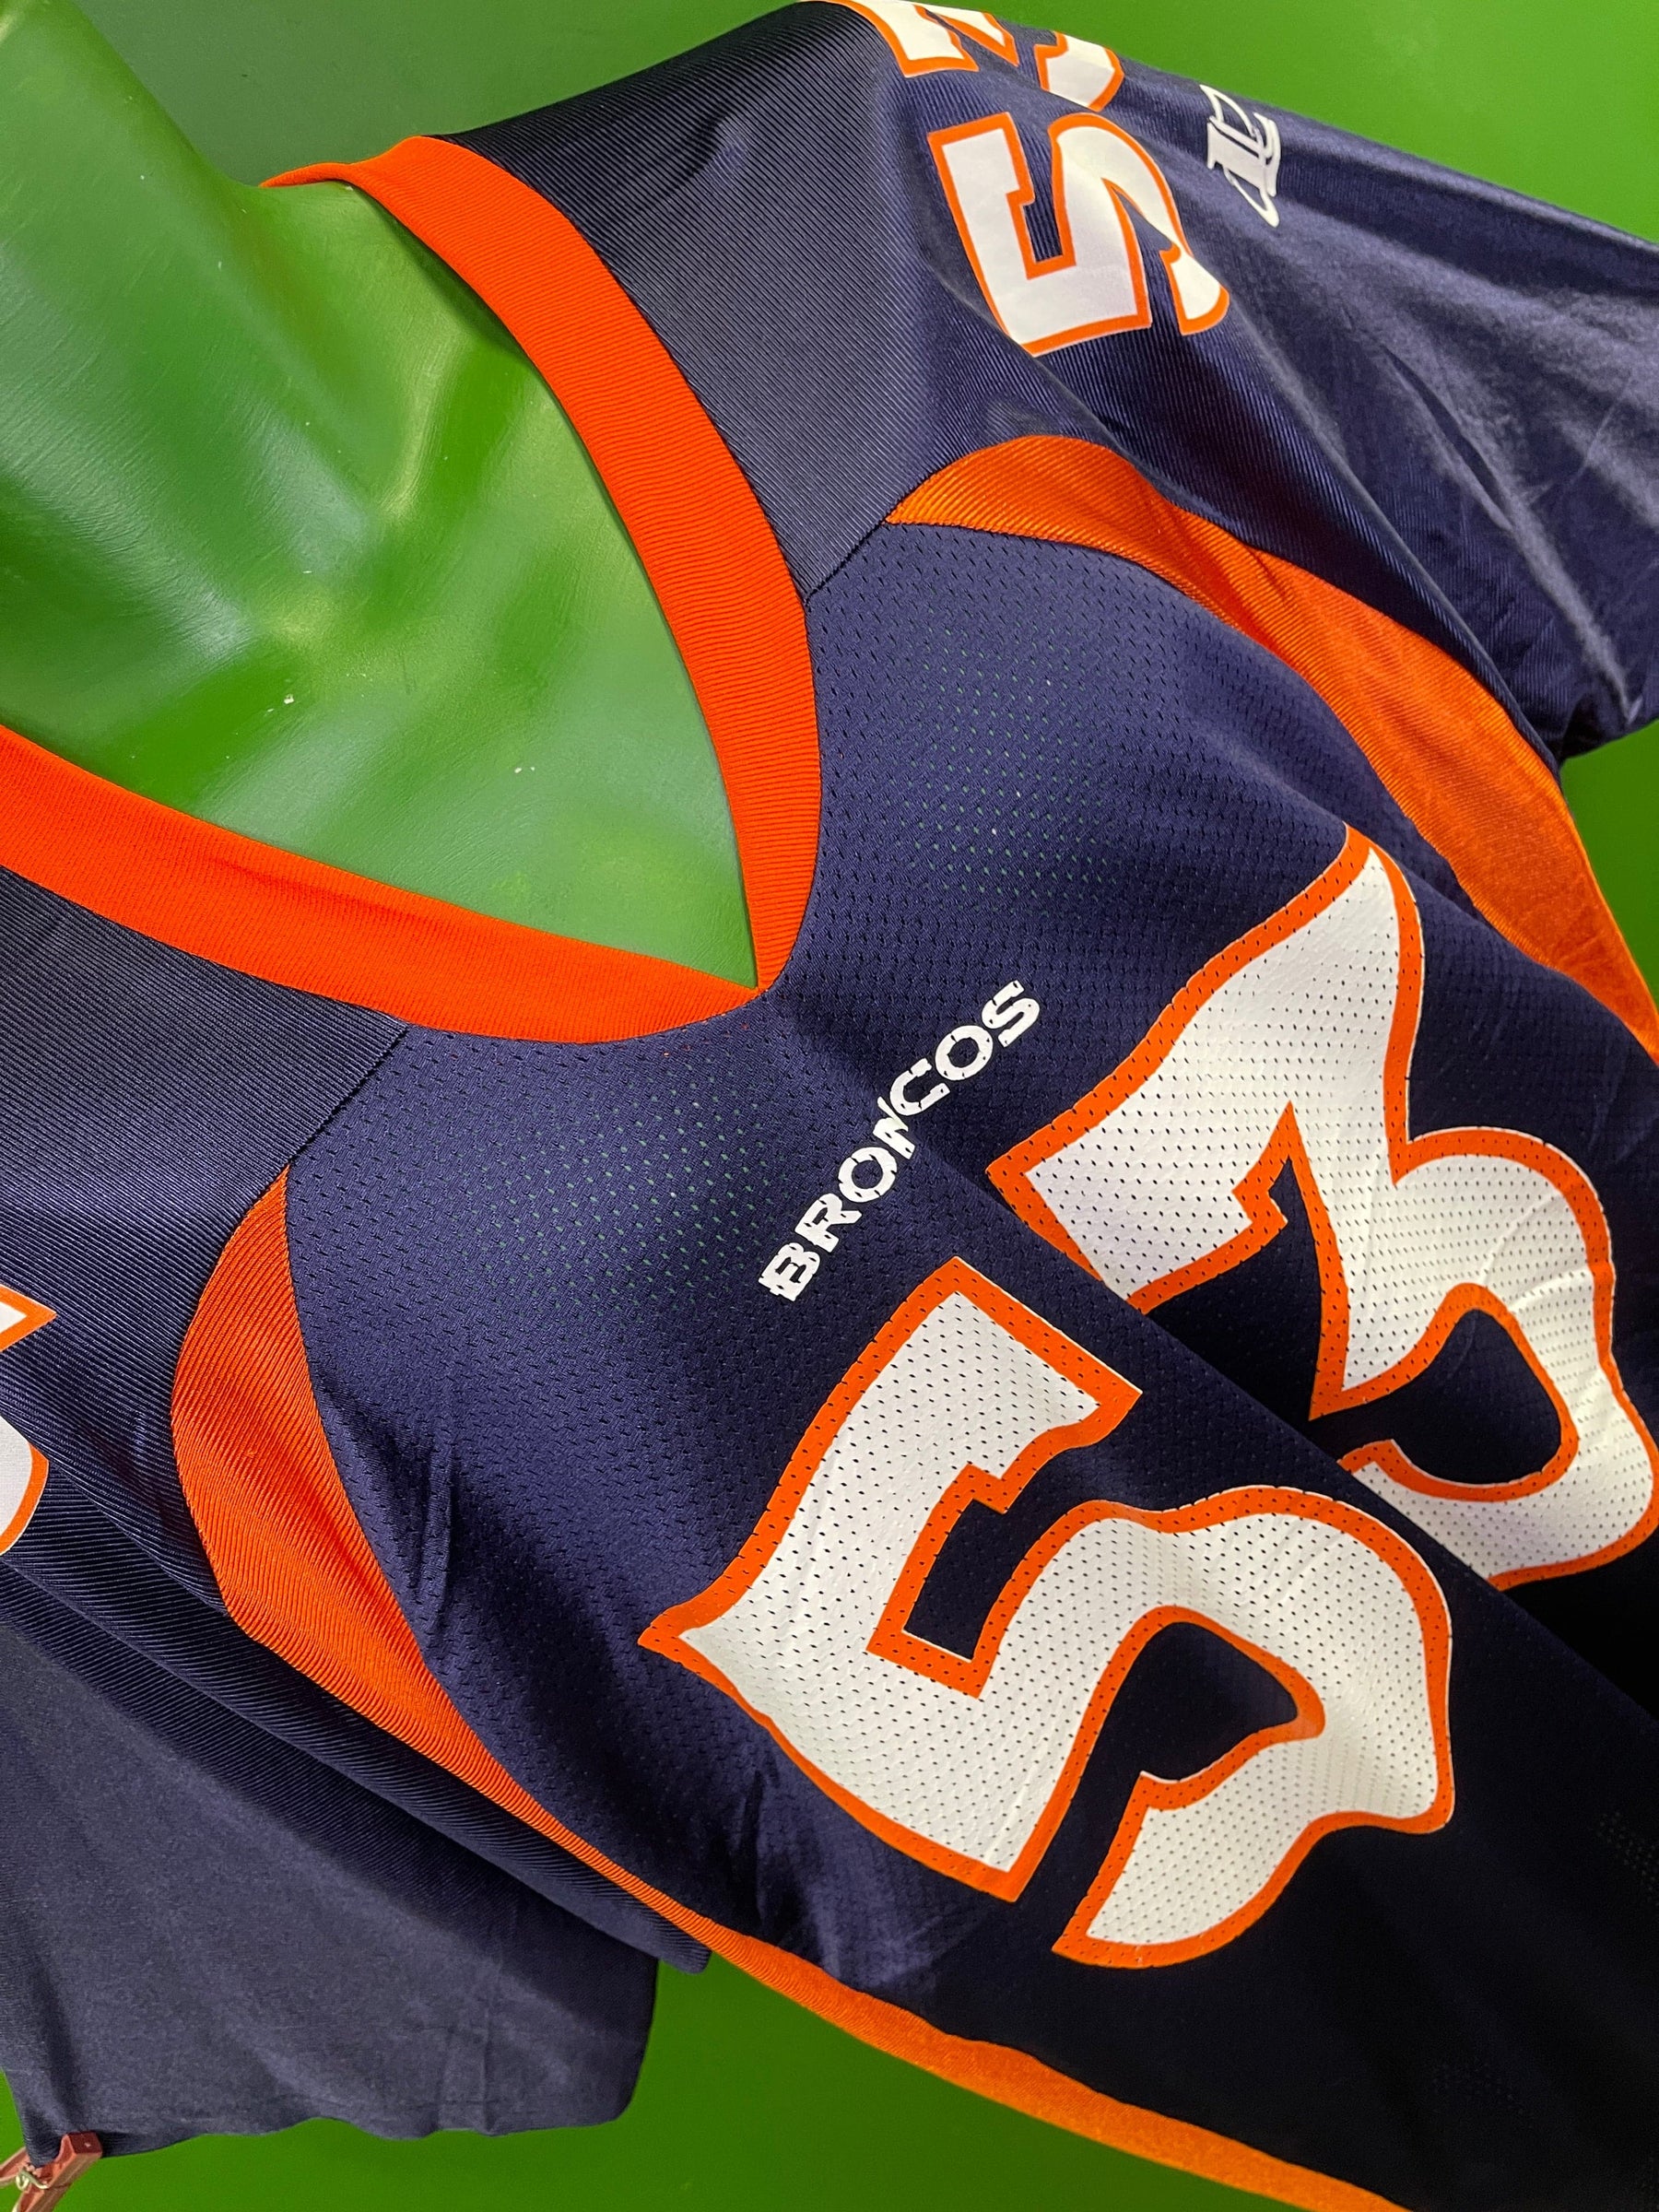 NFL Denver Broncos Bill Romanowski #53 Logo Athletic Jersey Men's X-Large